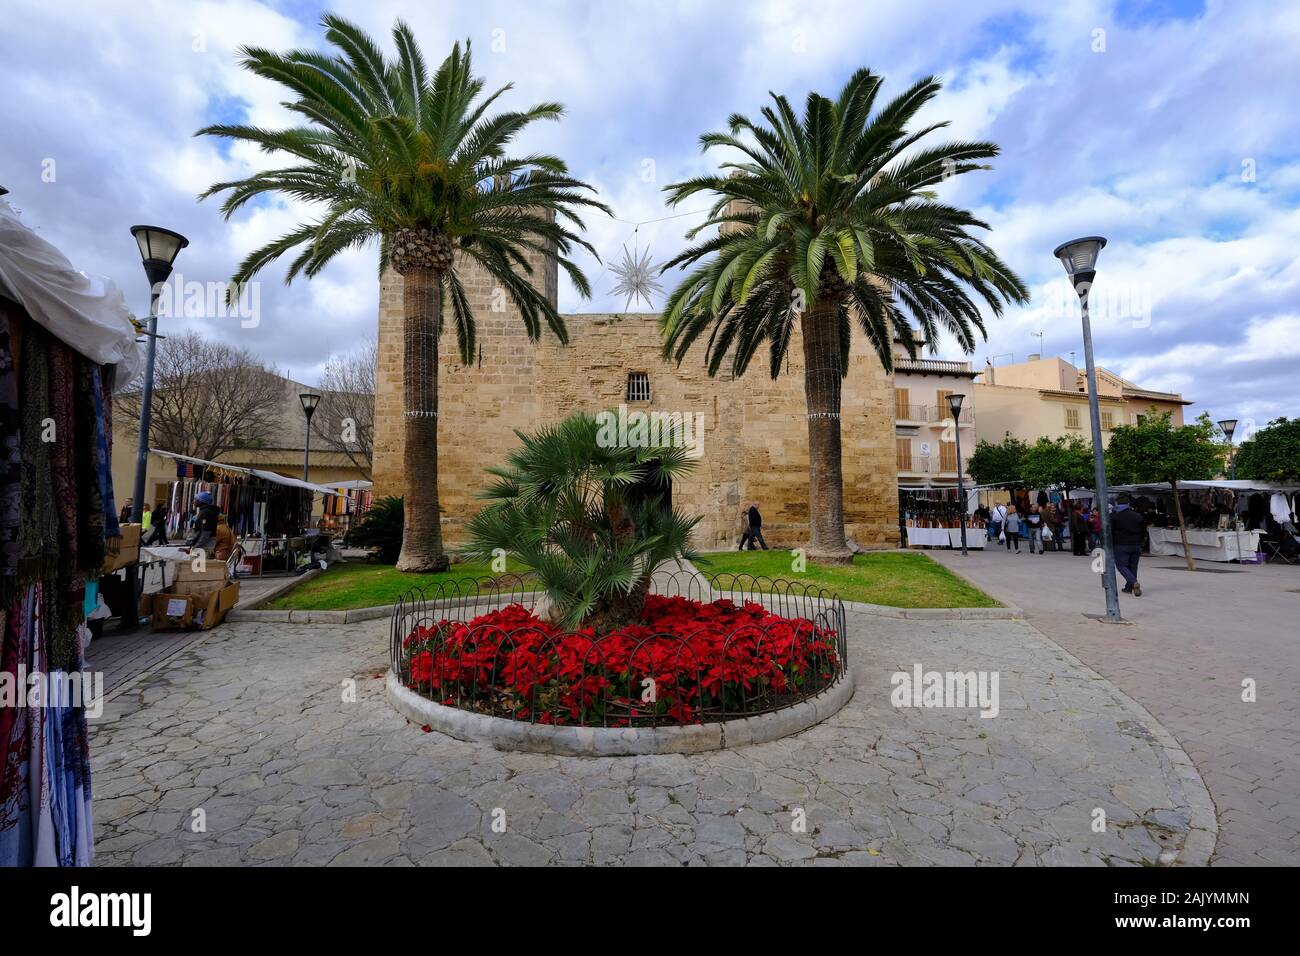 Europa, Spanien, Mallorca, Wochenmarkt in Pollenca am Ende Dezember 2019 Stockfoto